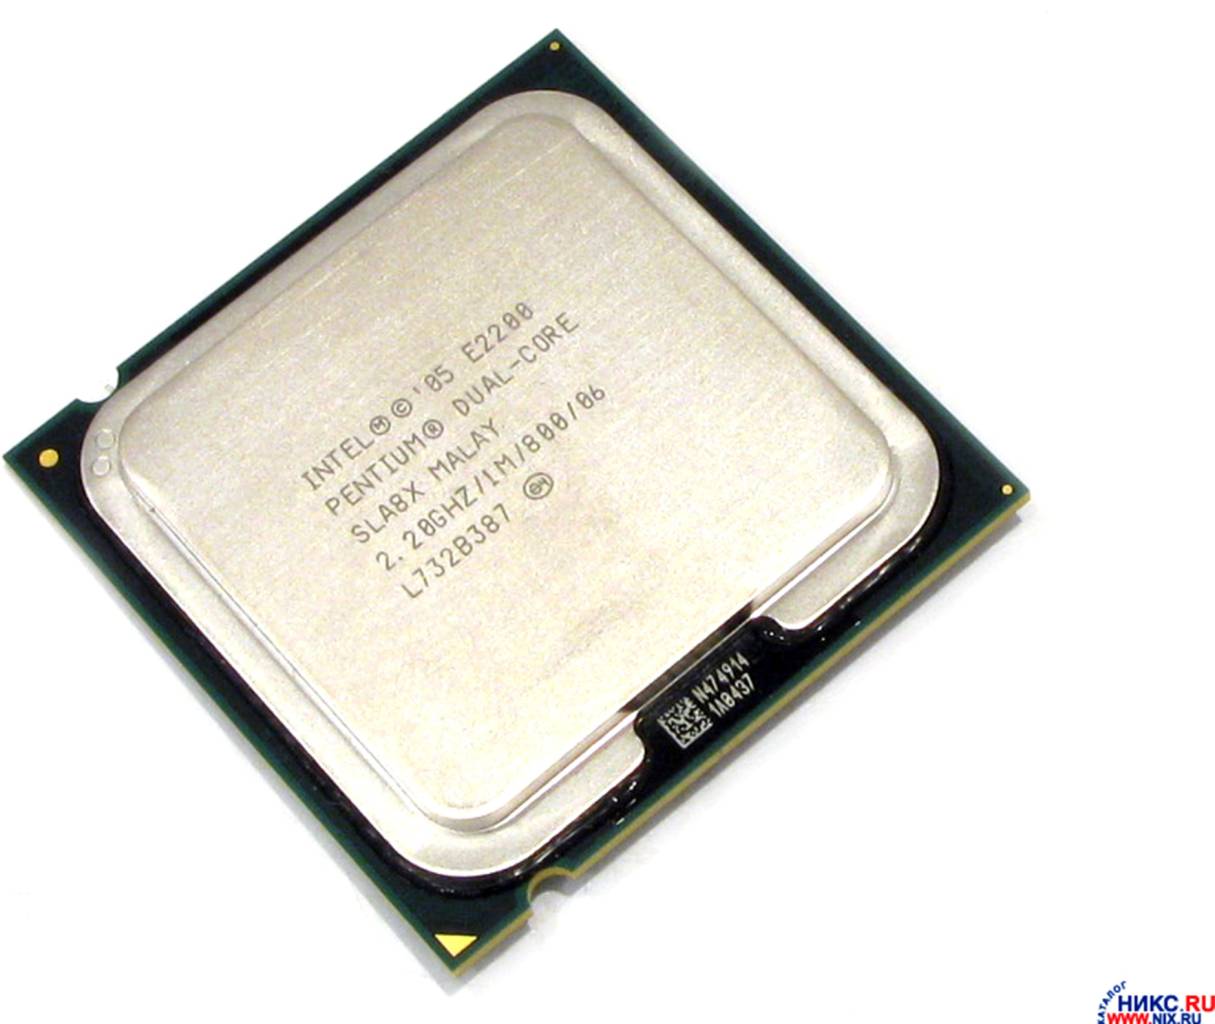   Intel Pentium Dual-Core E2200 2.2 / 1/ 800 775-LGA